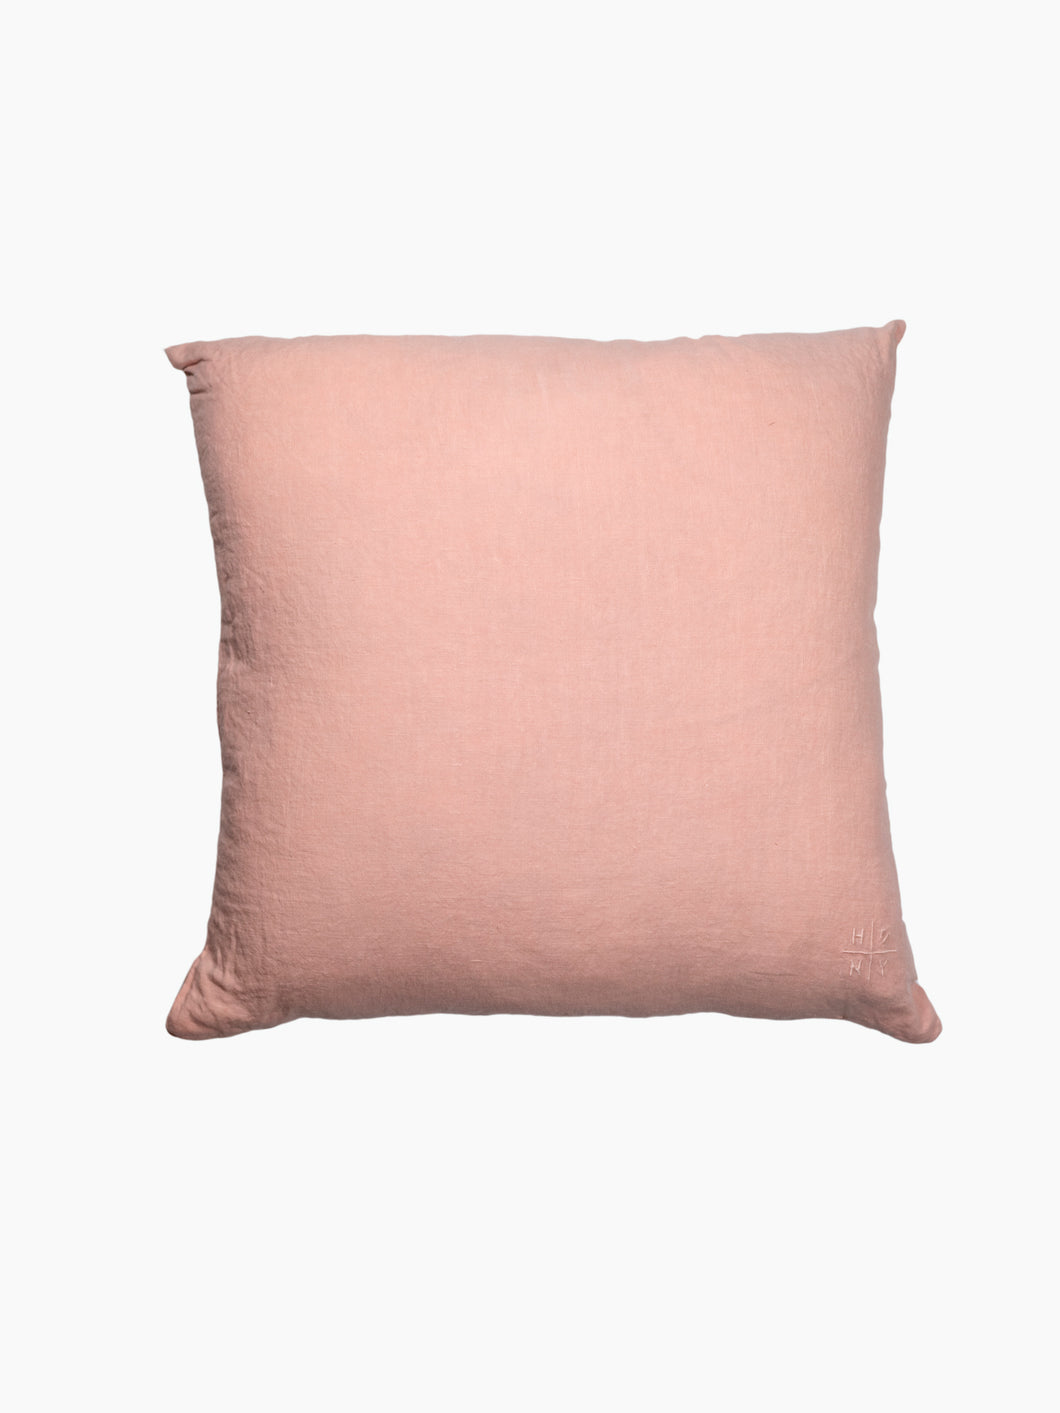 Blush Simple Linen Throw Pillow